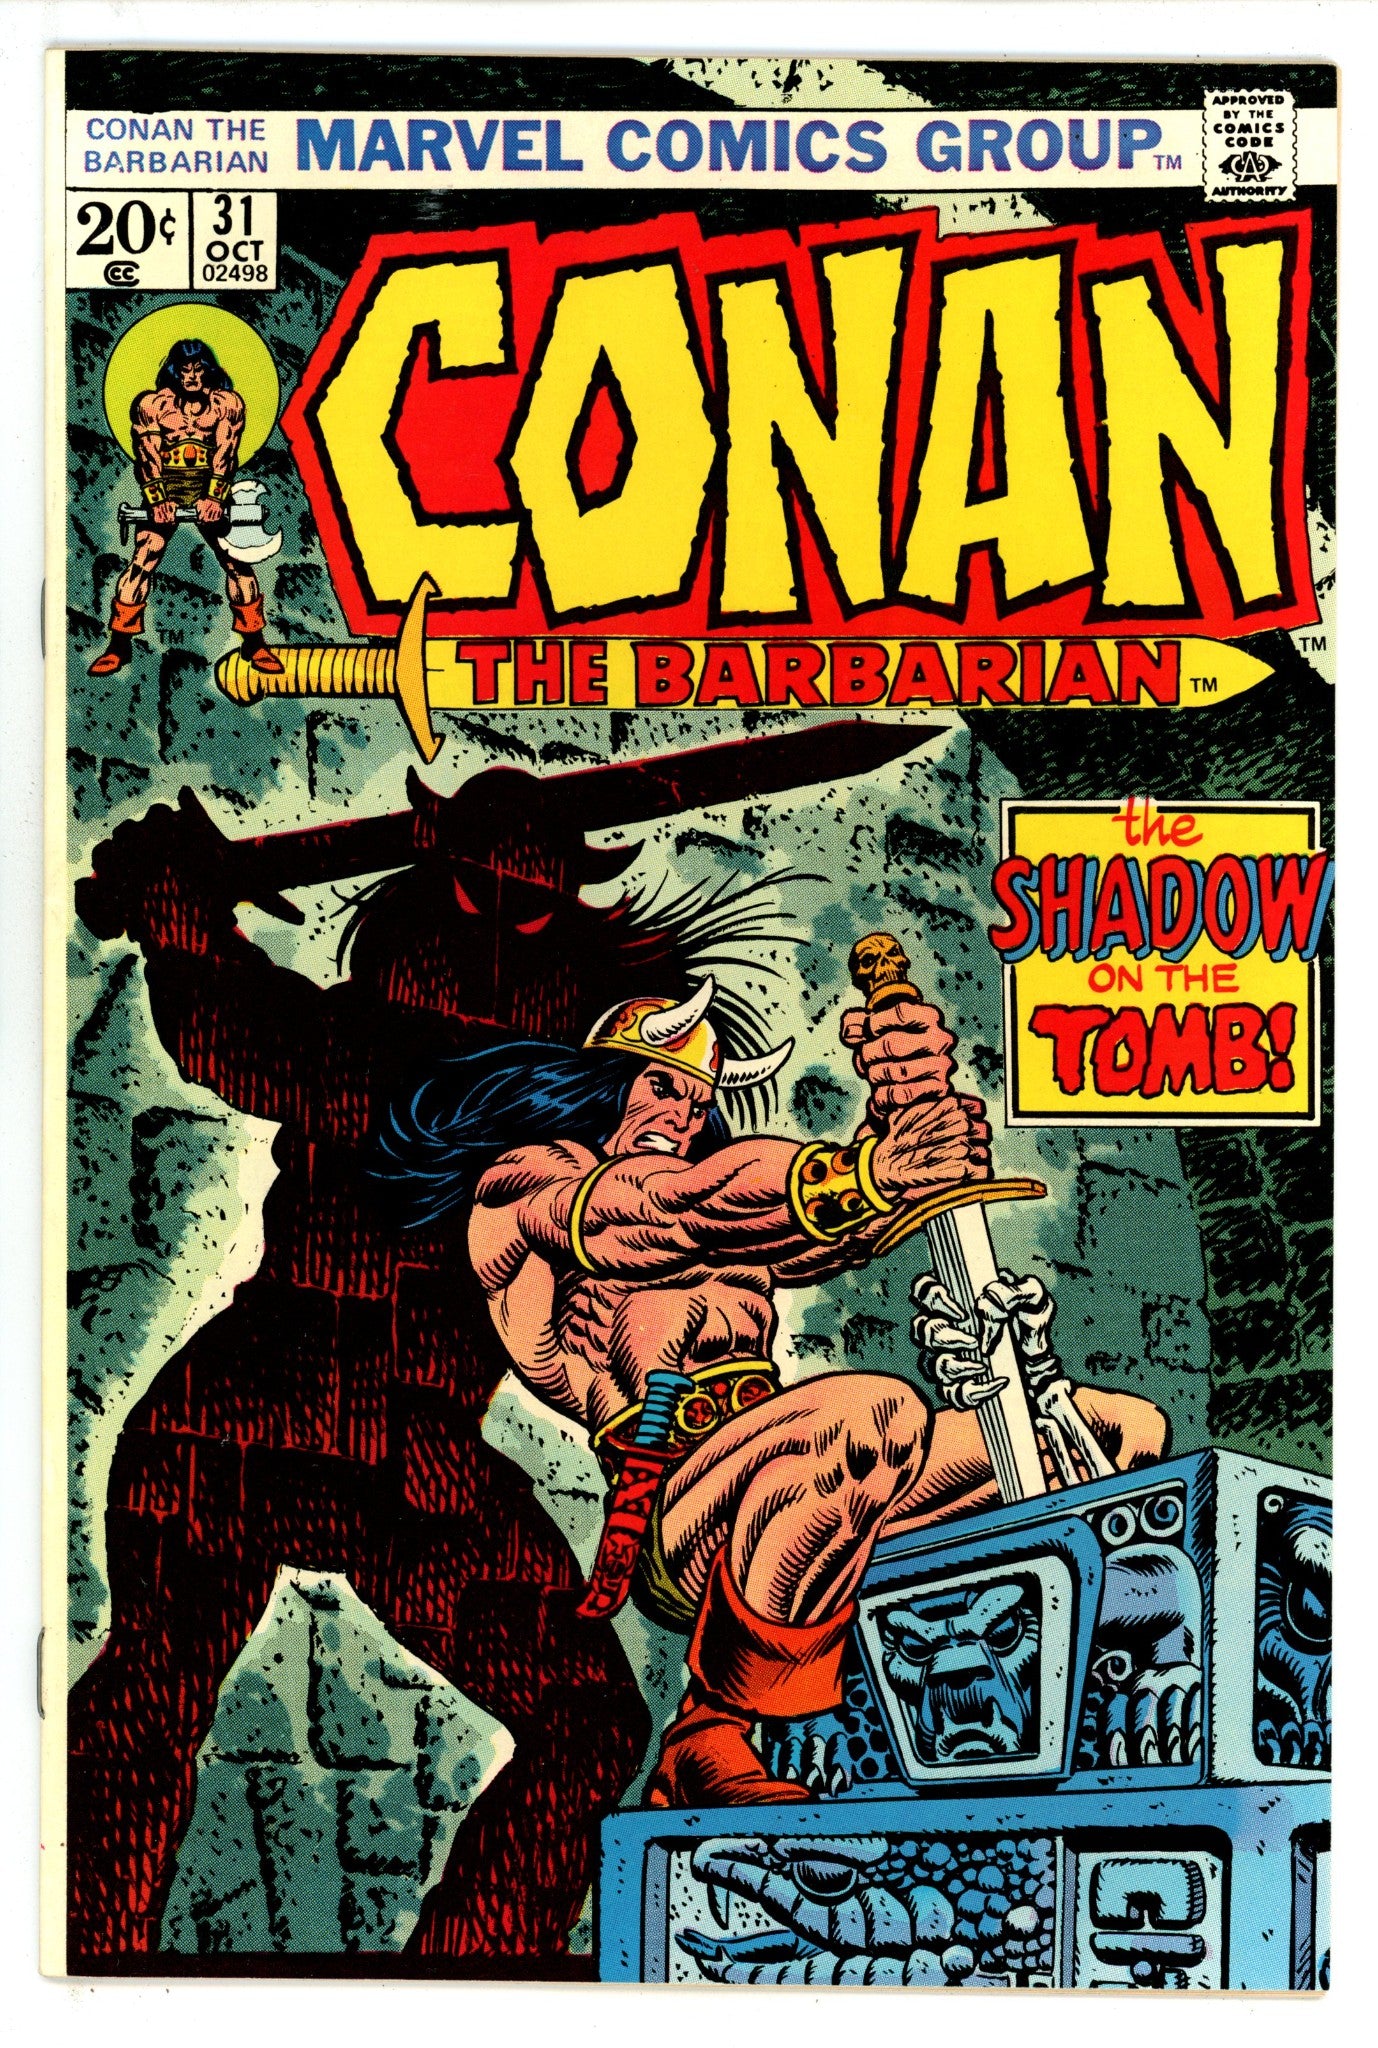 Conan the Barbarian Vol 1 31 VF+ (8.5) (1973) 